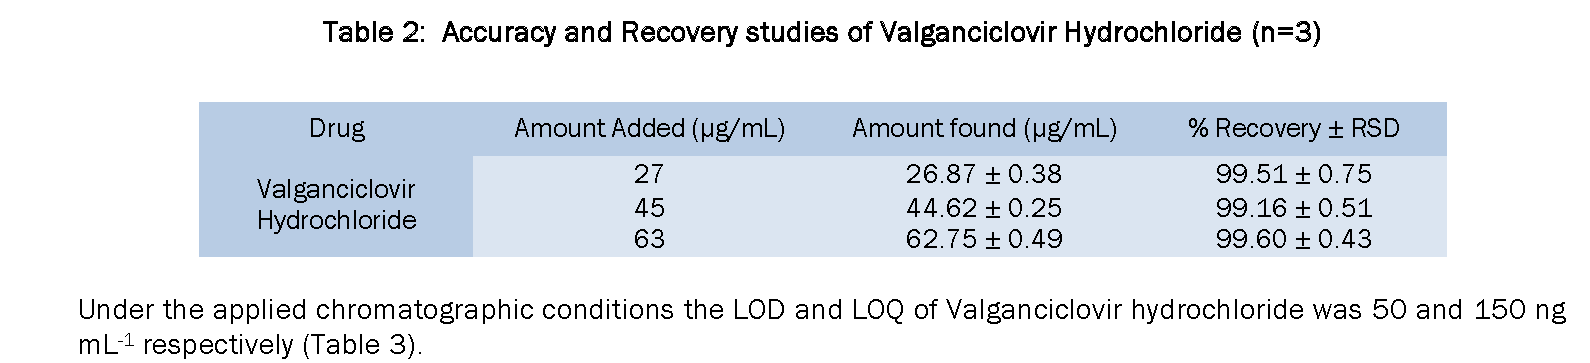 Pharmaceutical-Analysis-Accuracy-and-Recovery-studies-Valganciclovir-Hydrochloride